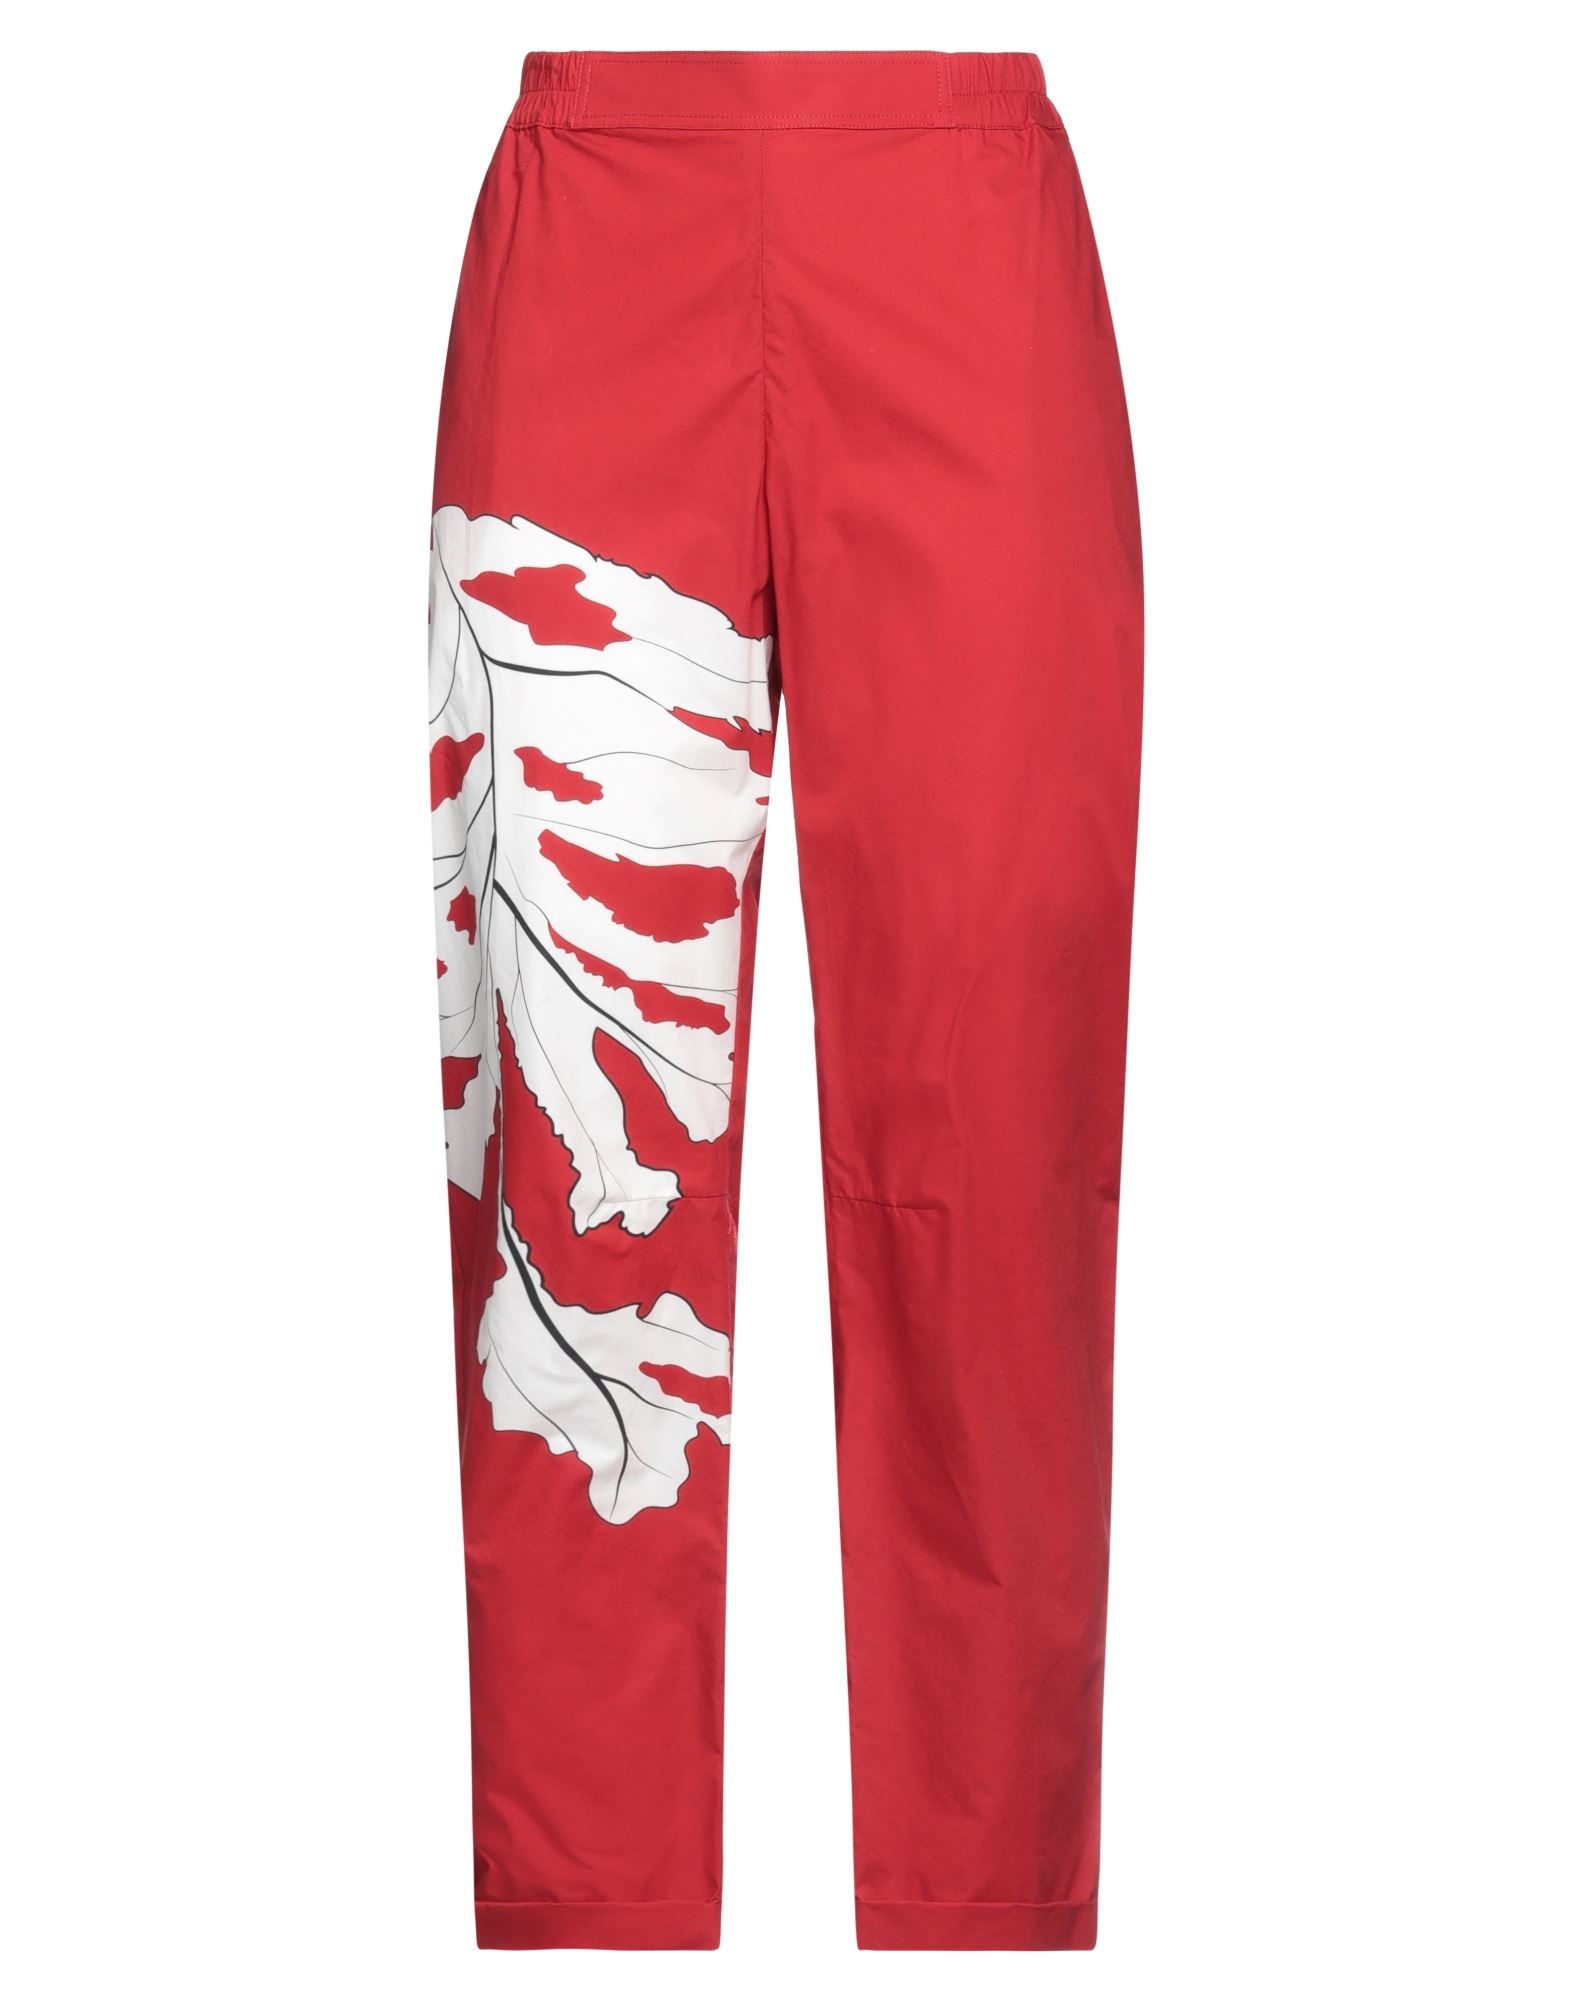 Gentryportofino Pants In Red